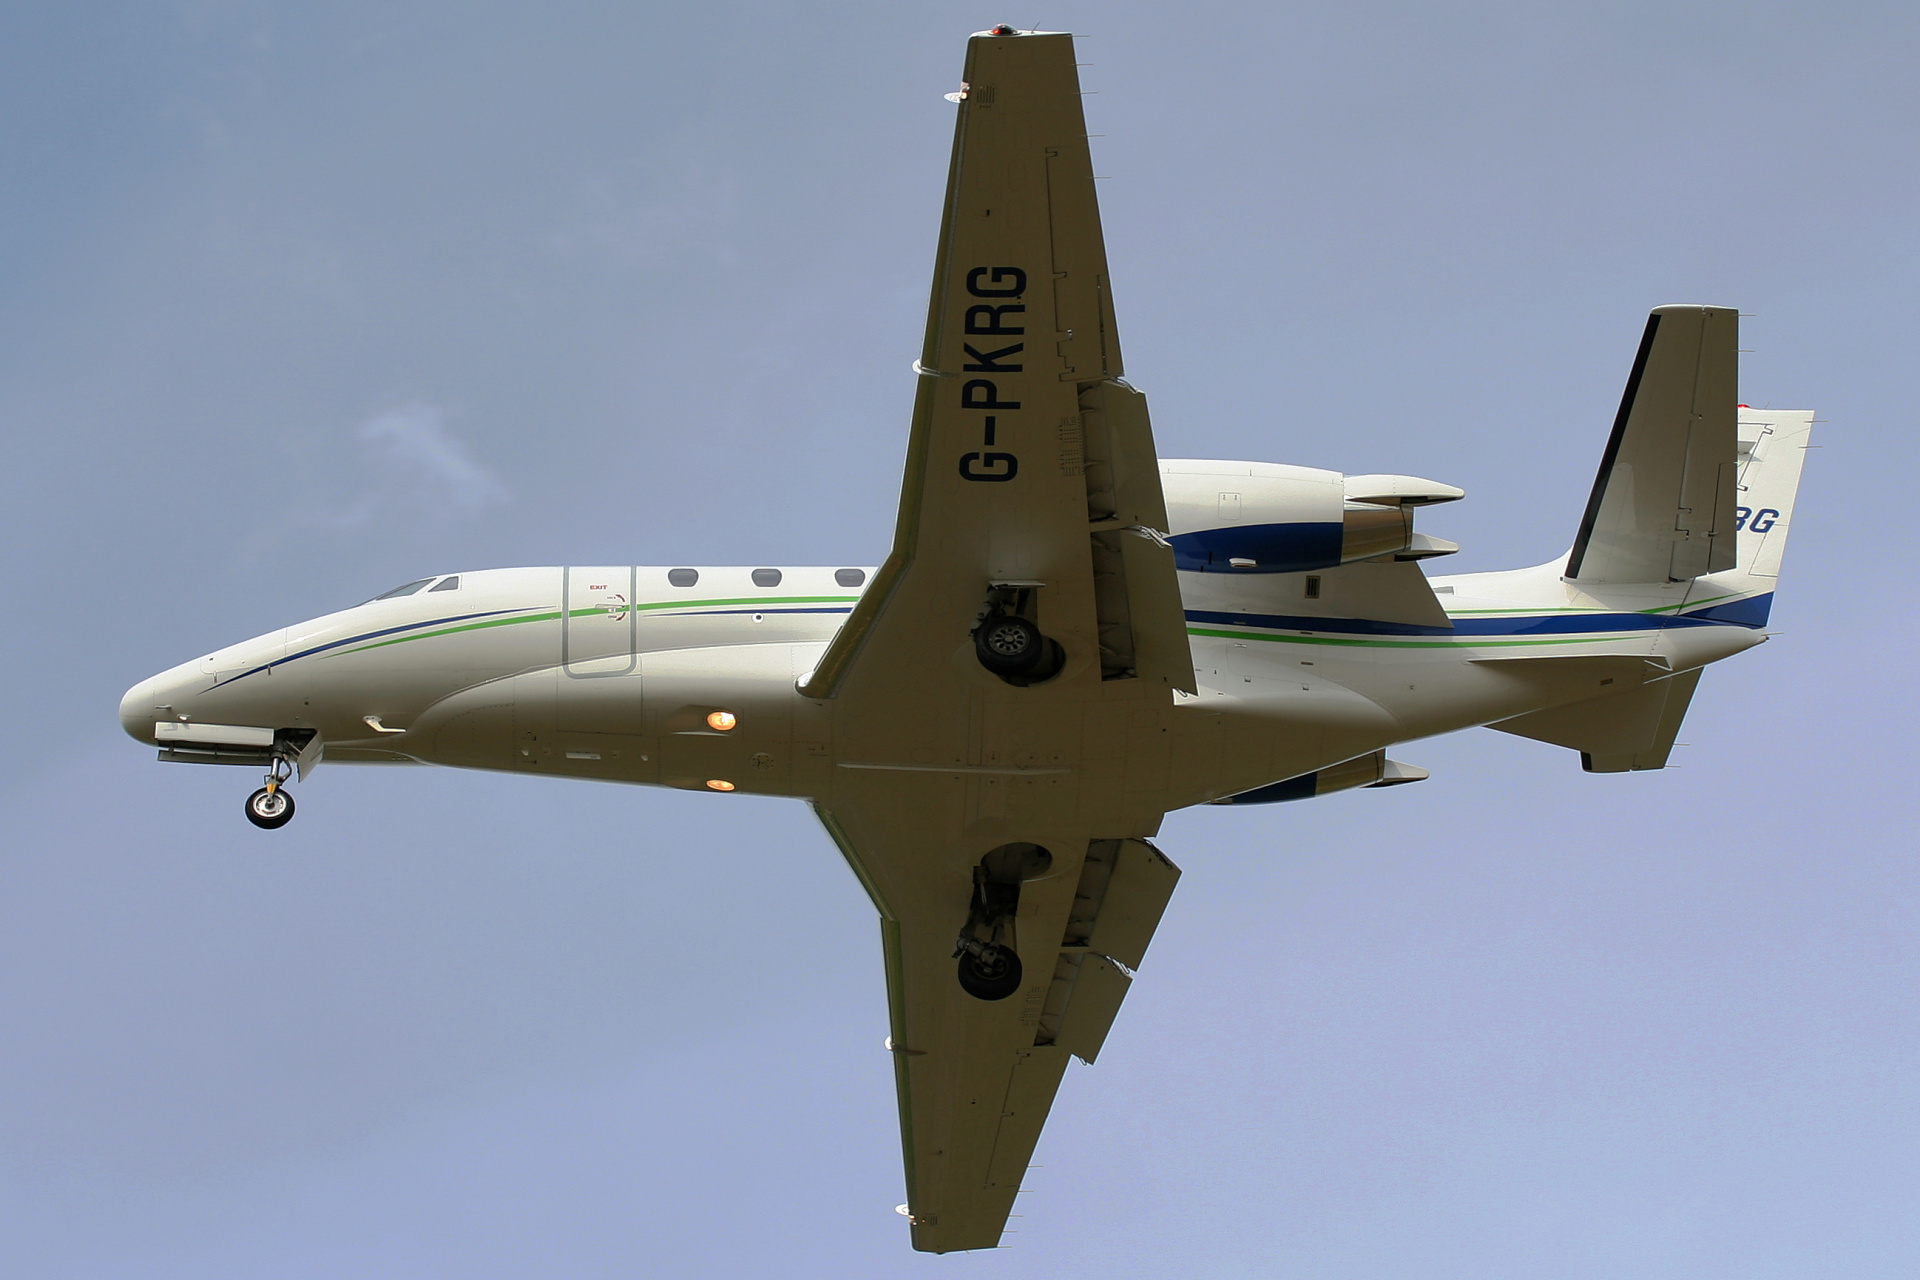 Citation XLS, G-PKRG, Parkridge Aviation (Samoloty » Spotting na EPWA » Cessna 560XL)